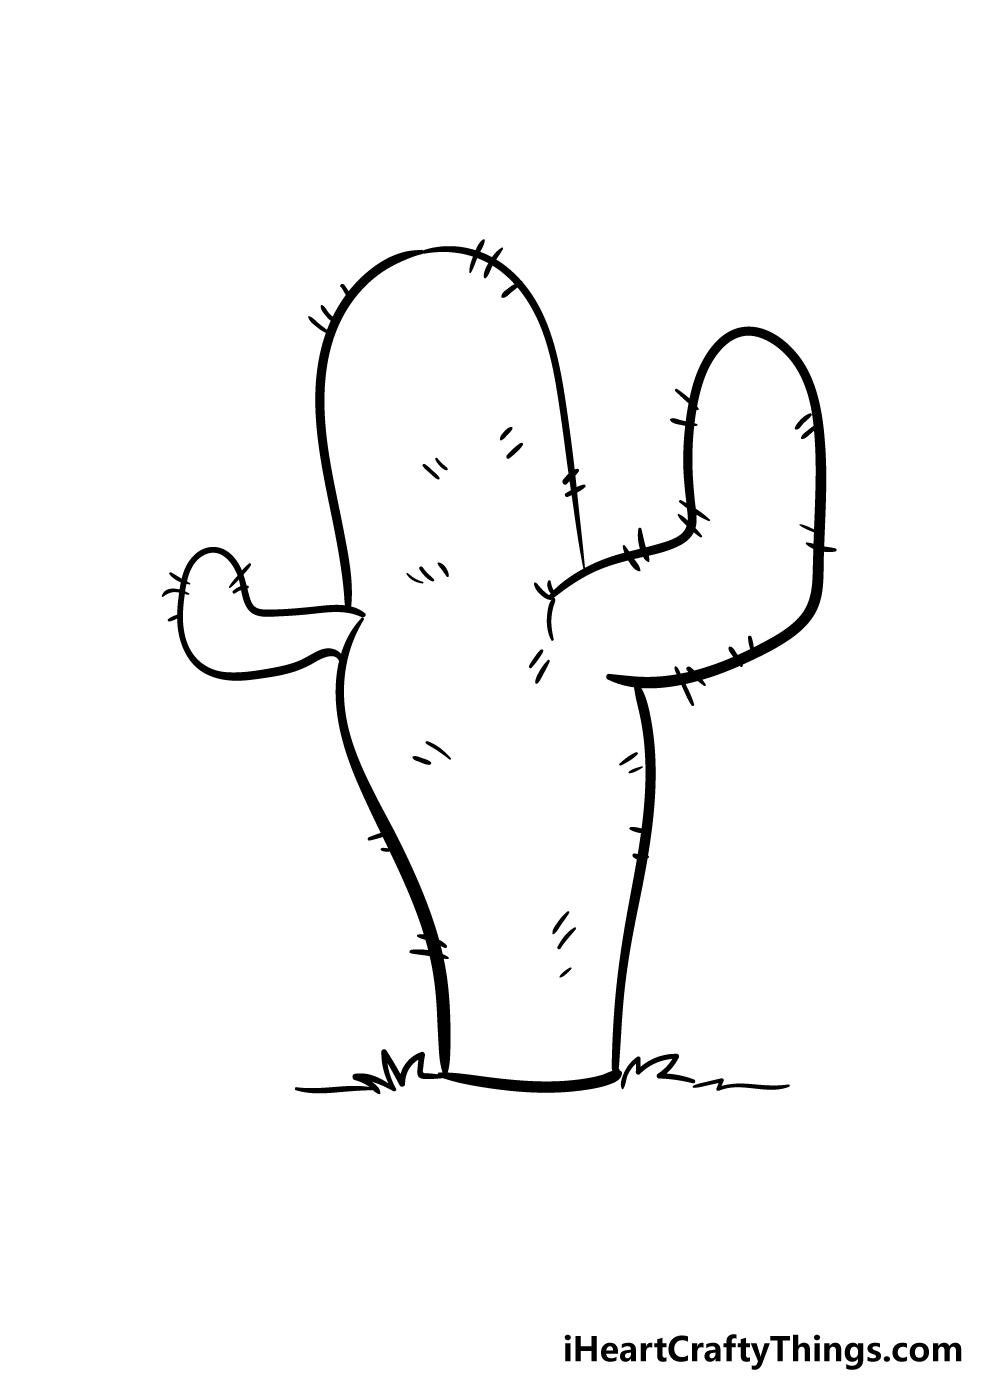 cactus drawing step 5